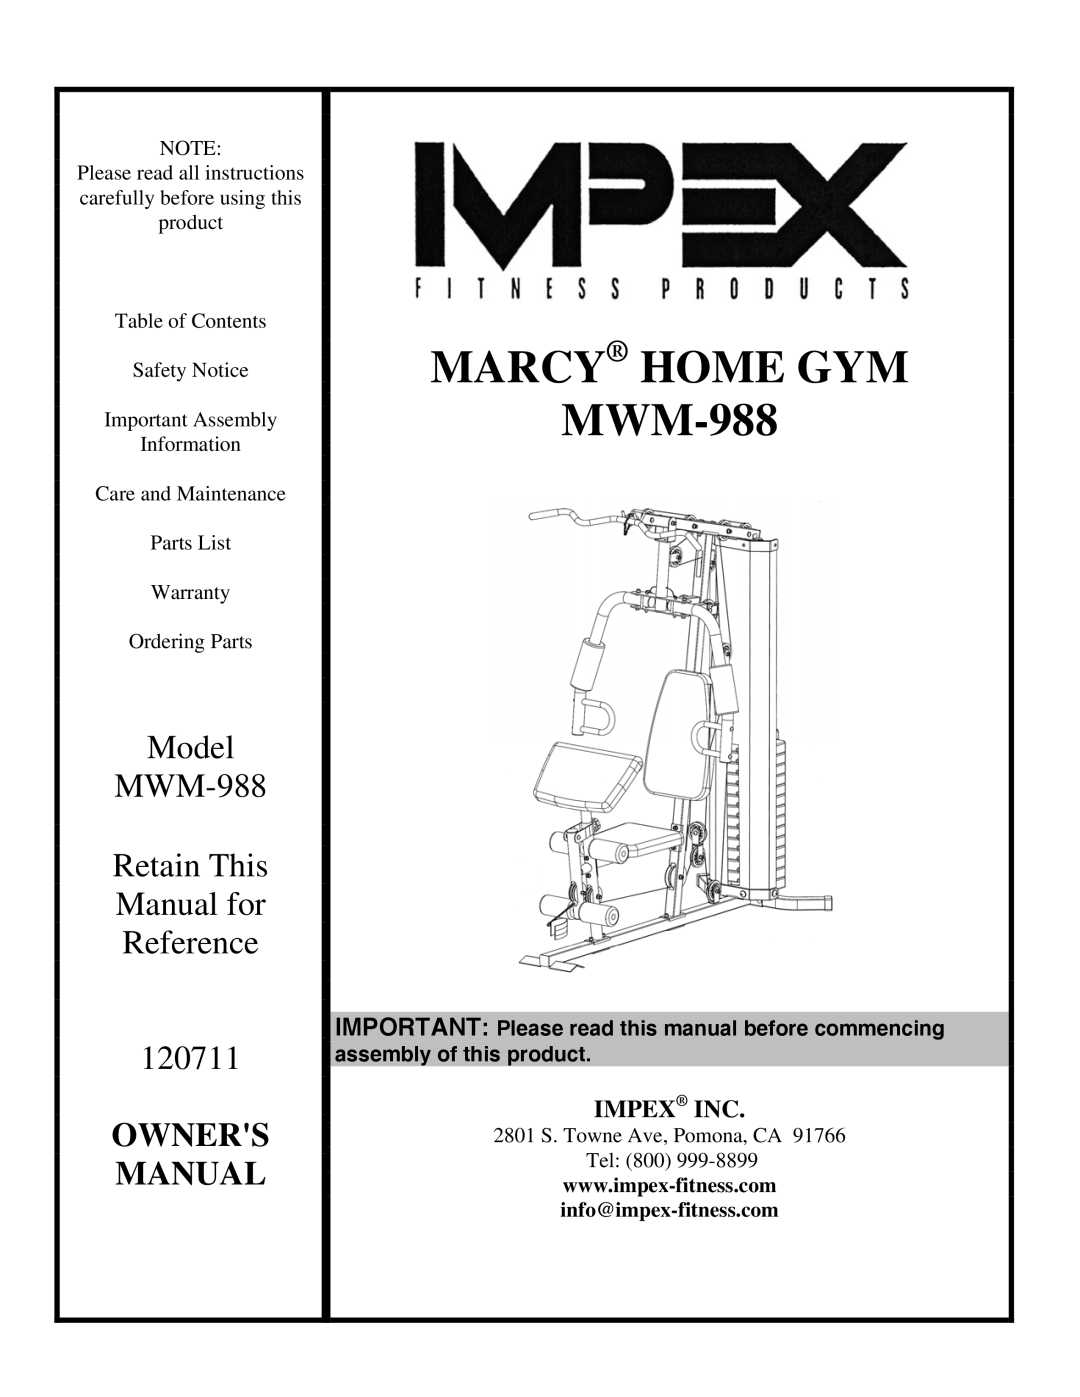 Impex MWM-988 manual Marcy Home GYM 